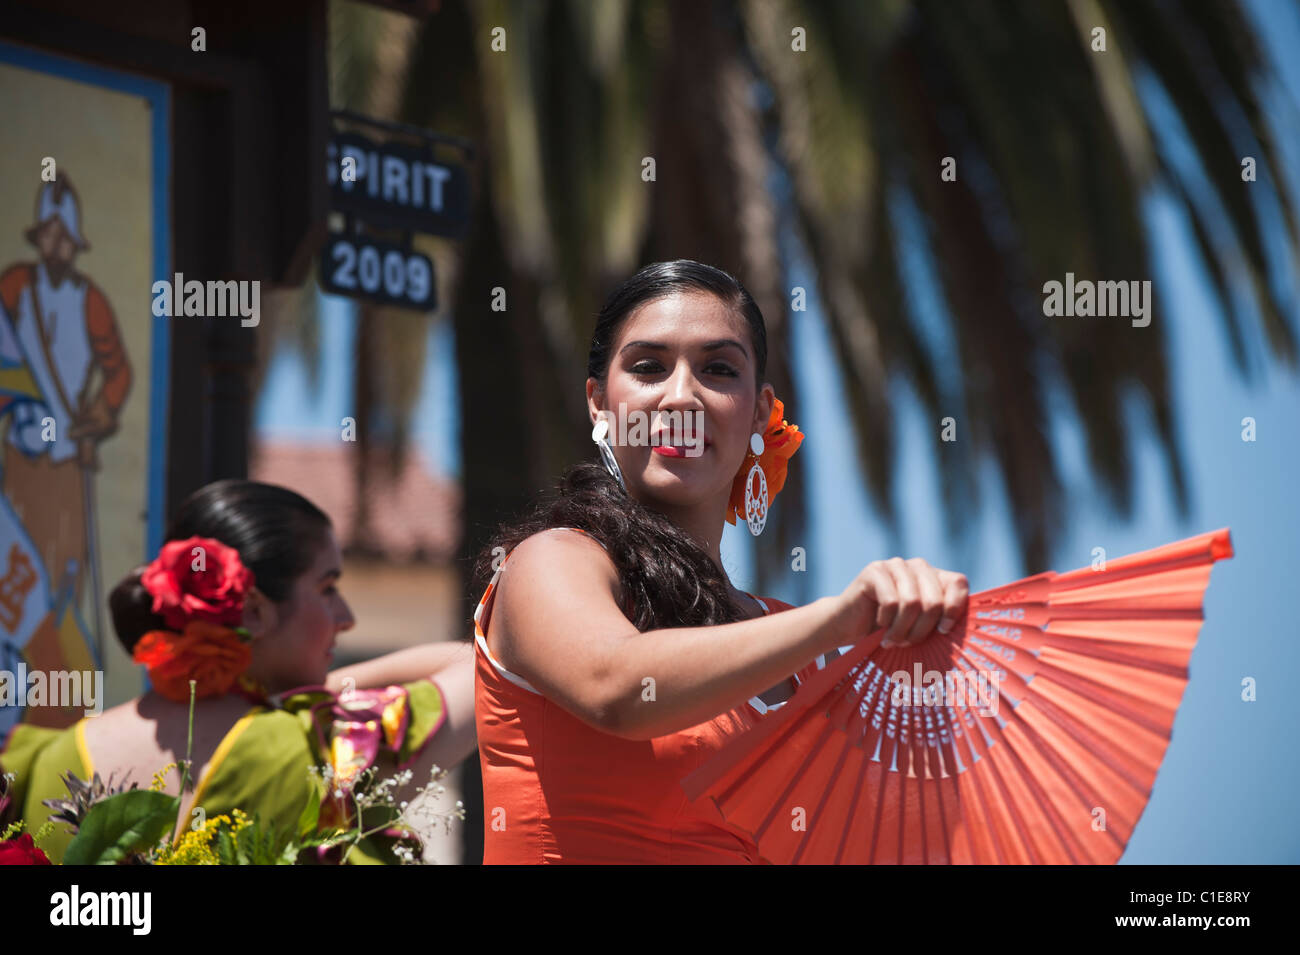 Woman in traditional Spanish dress in Fiesta parade, Santa Barbara, California, USA Stock Photo